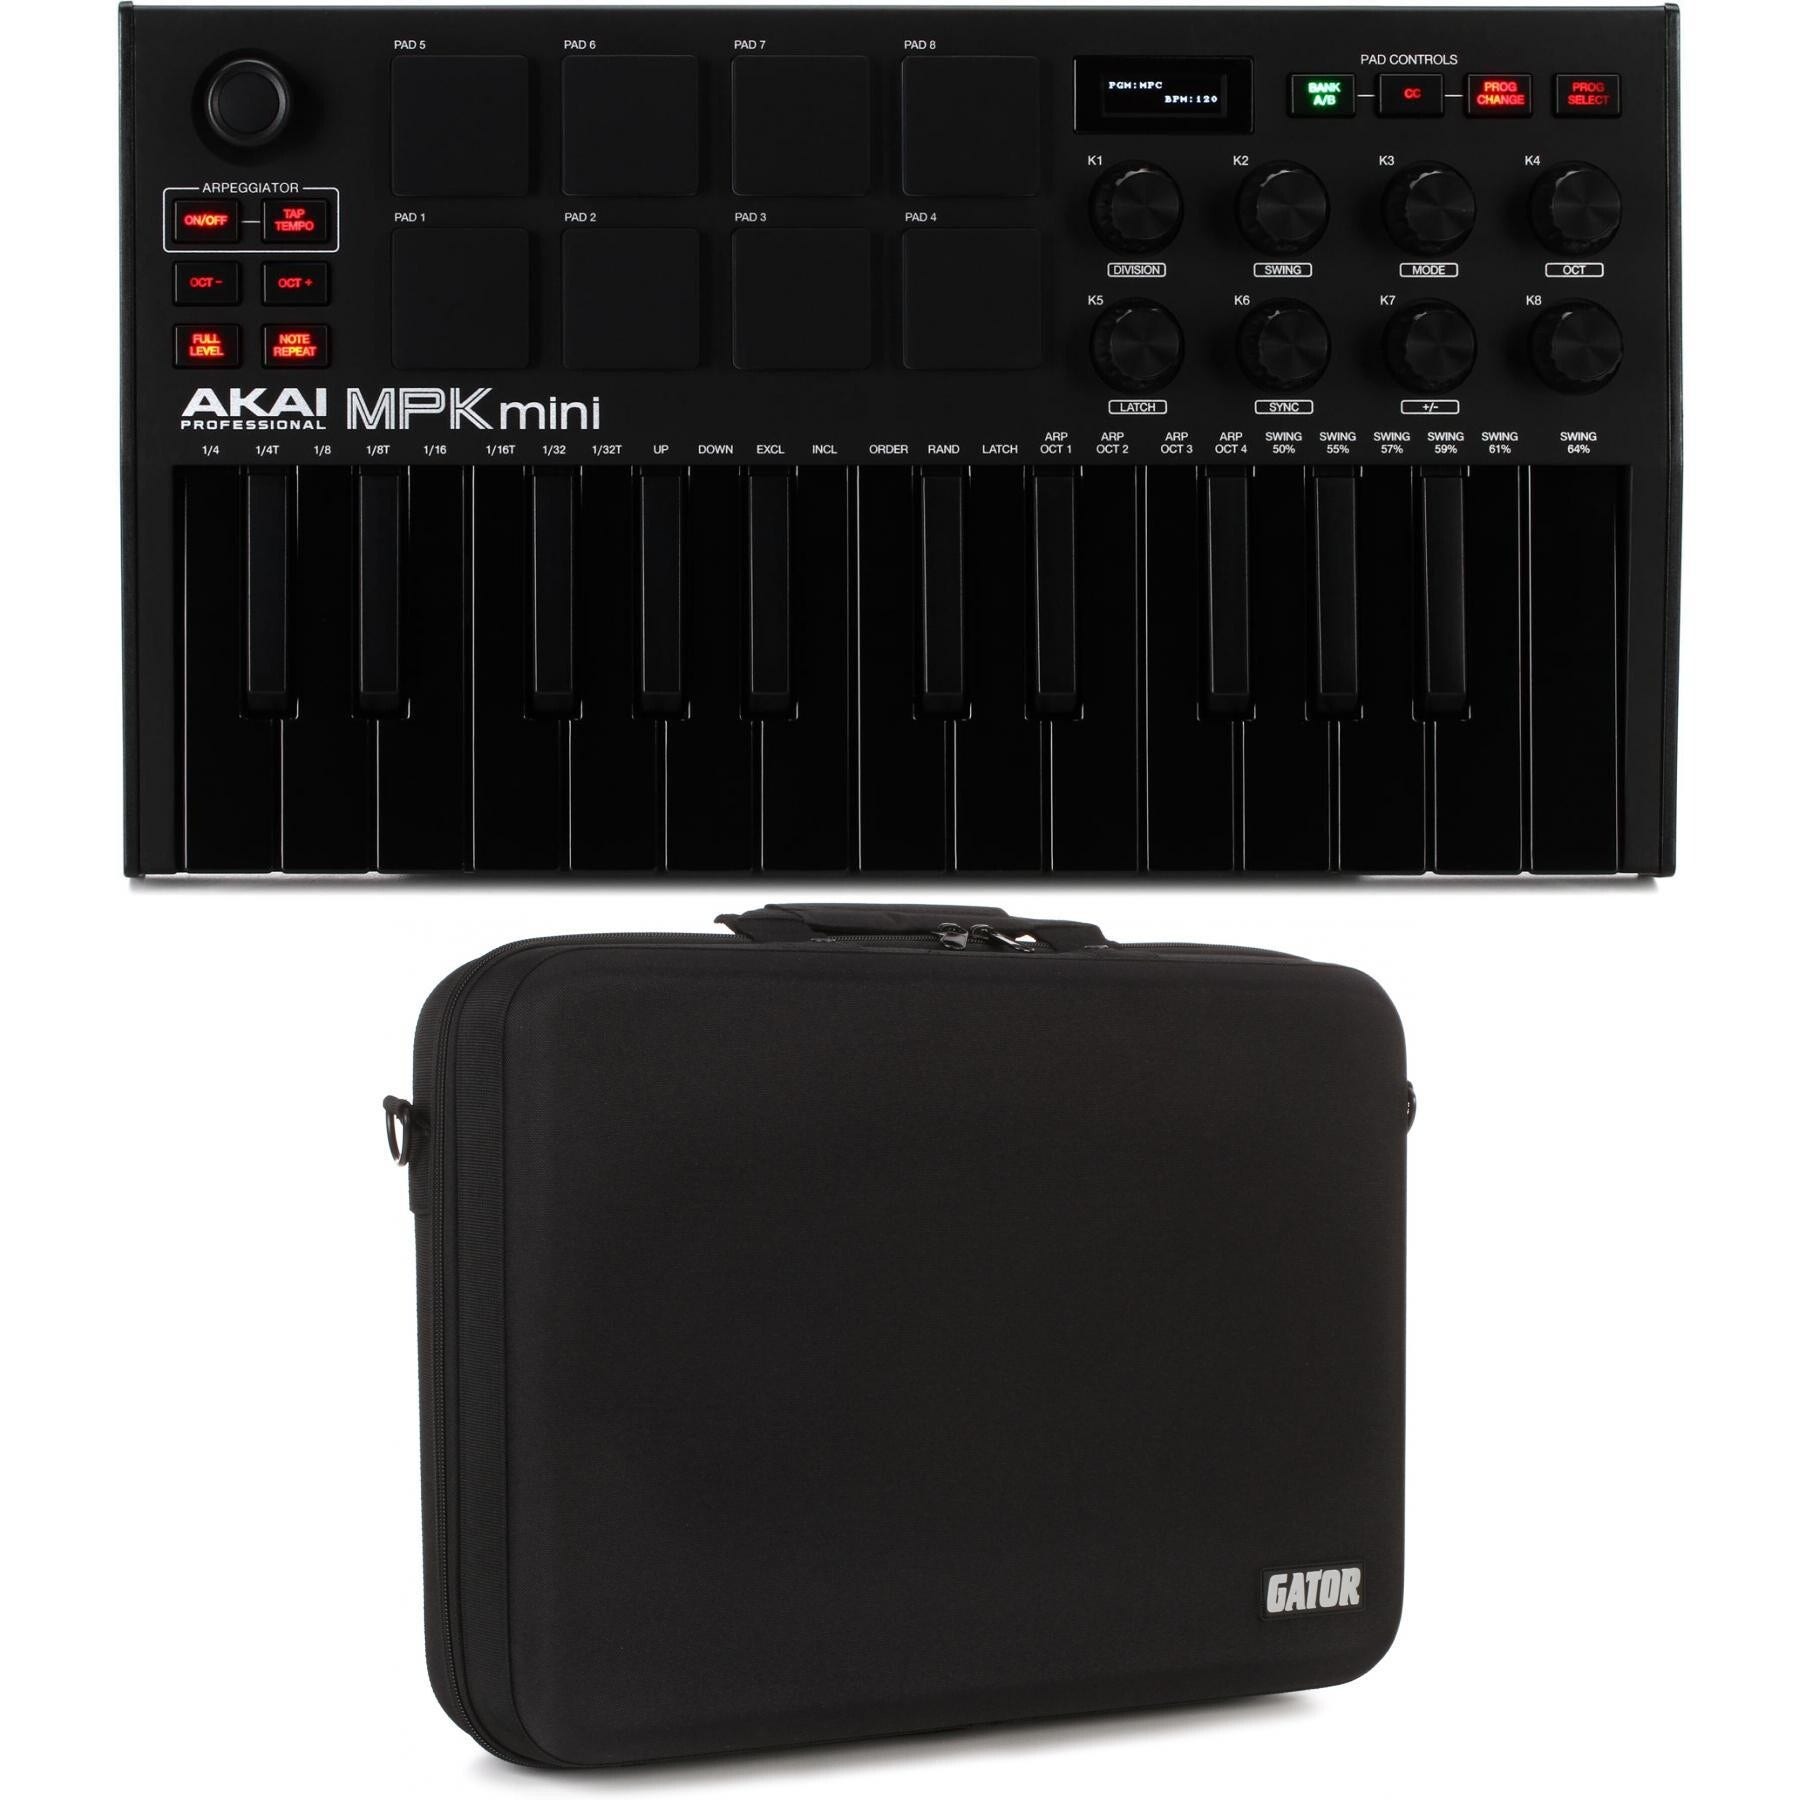 AKAI MPK mini MK3 Professional MIDI Keyboard Controller Black New in Box  JAPAN